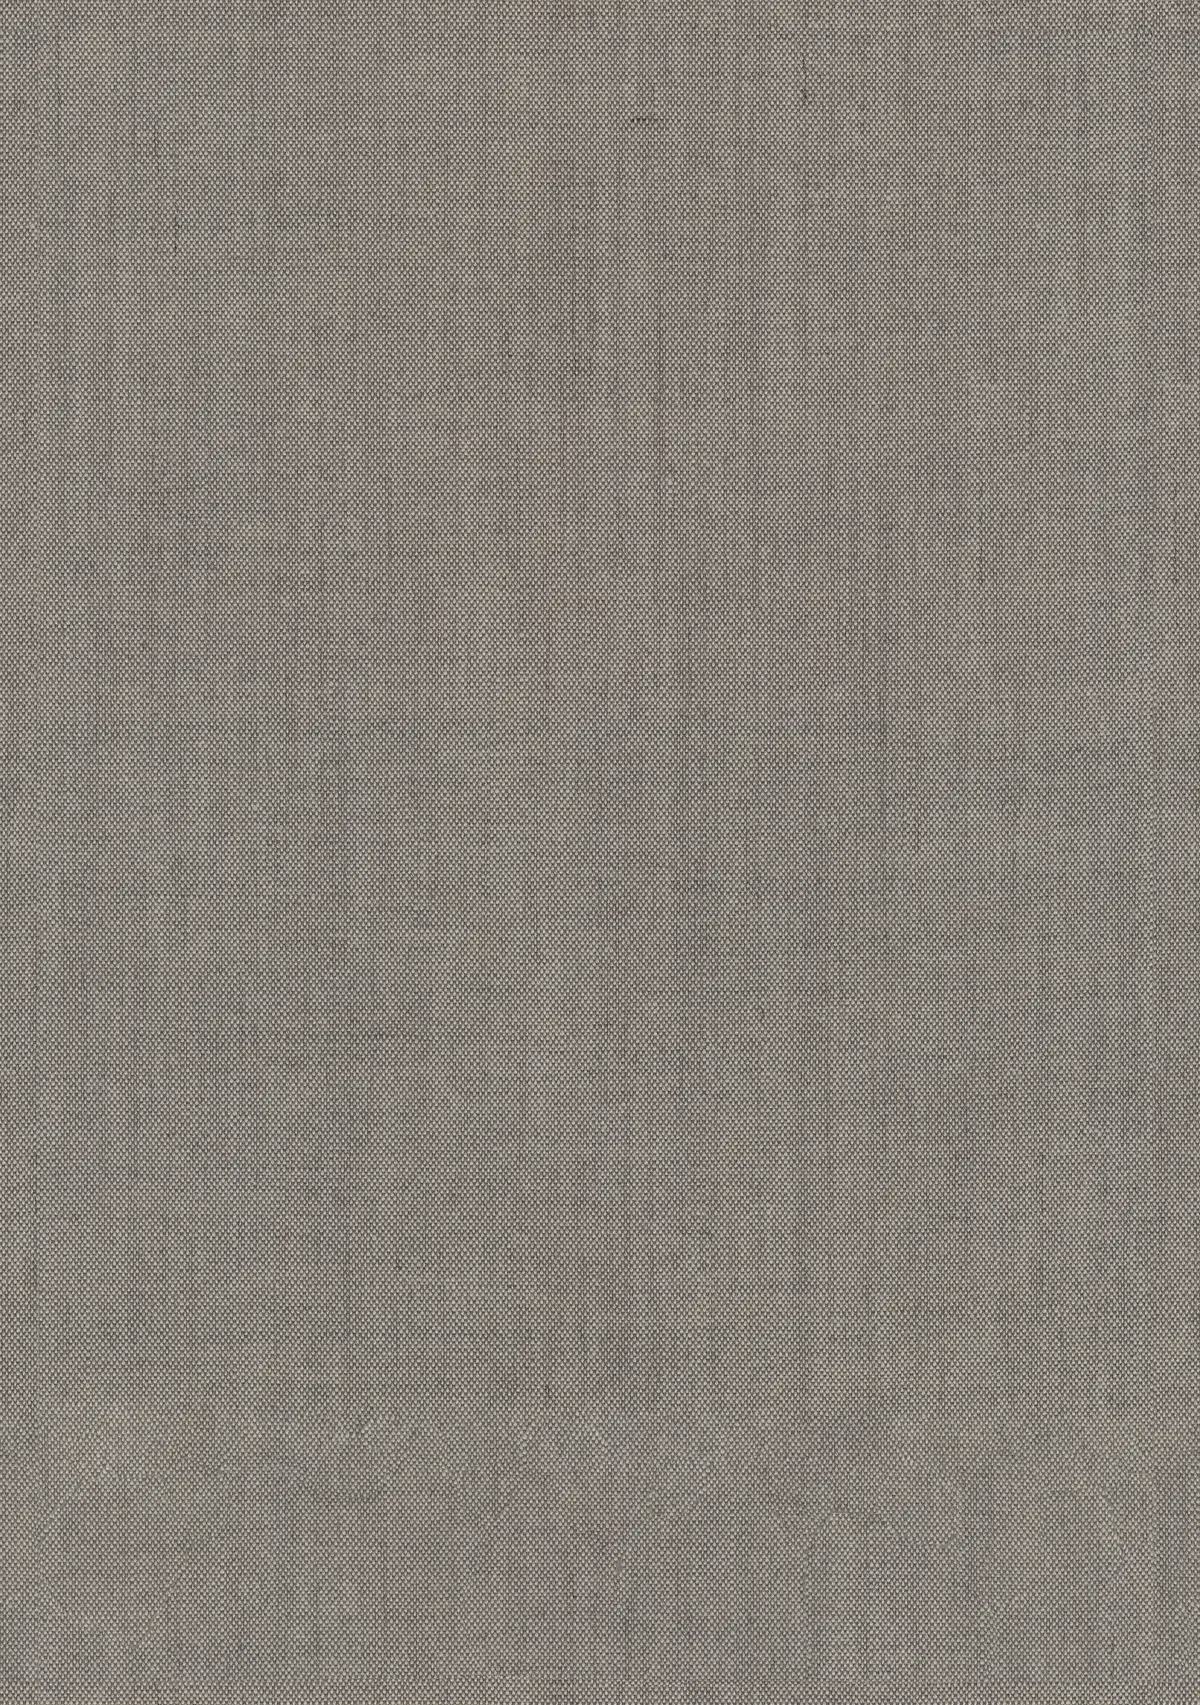 Fabric sample Remix 3 126 grey